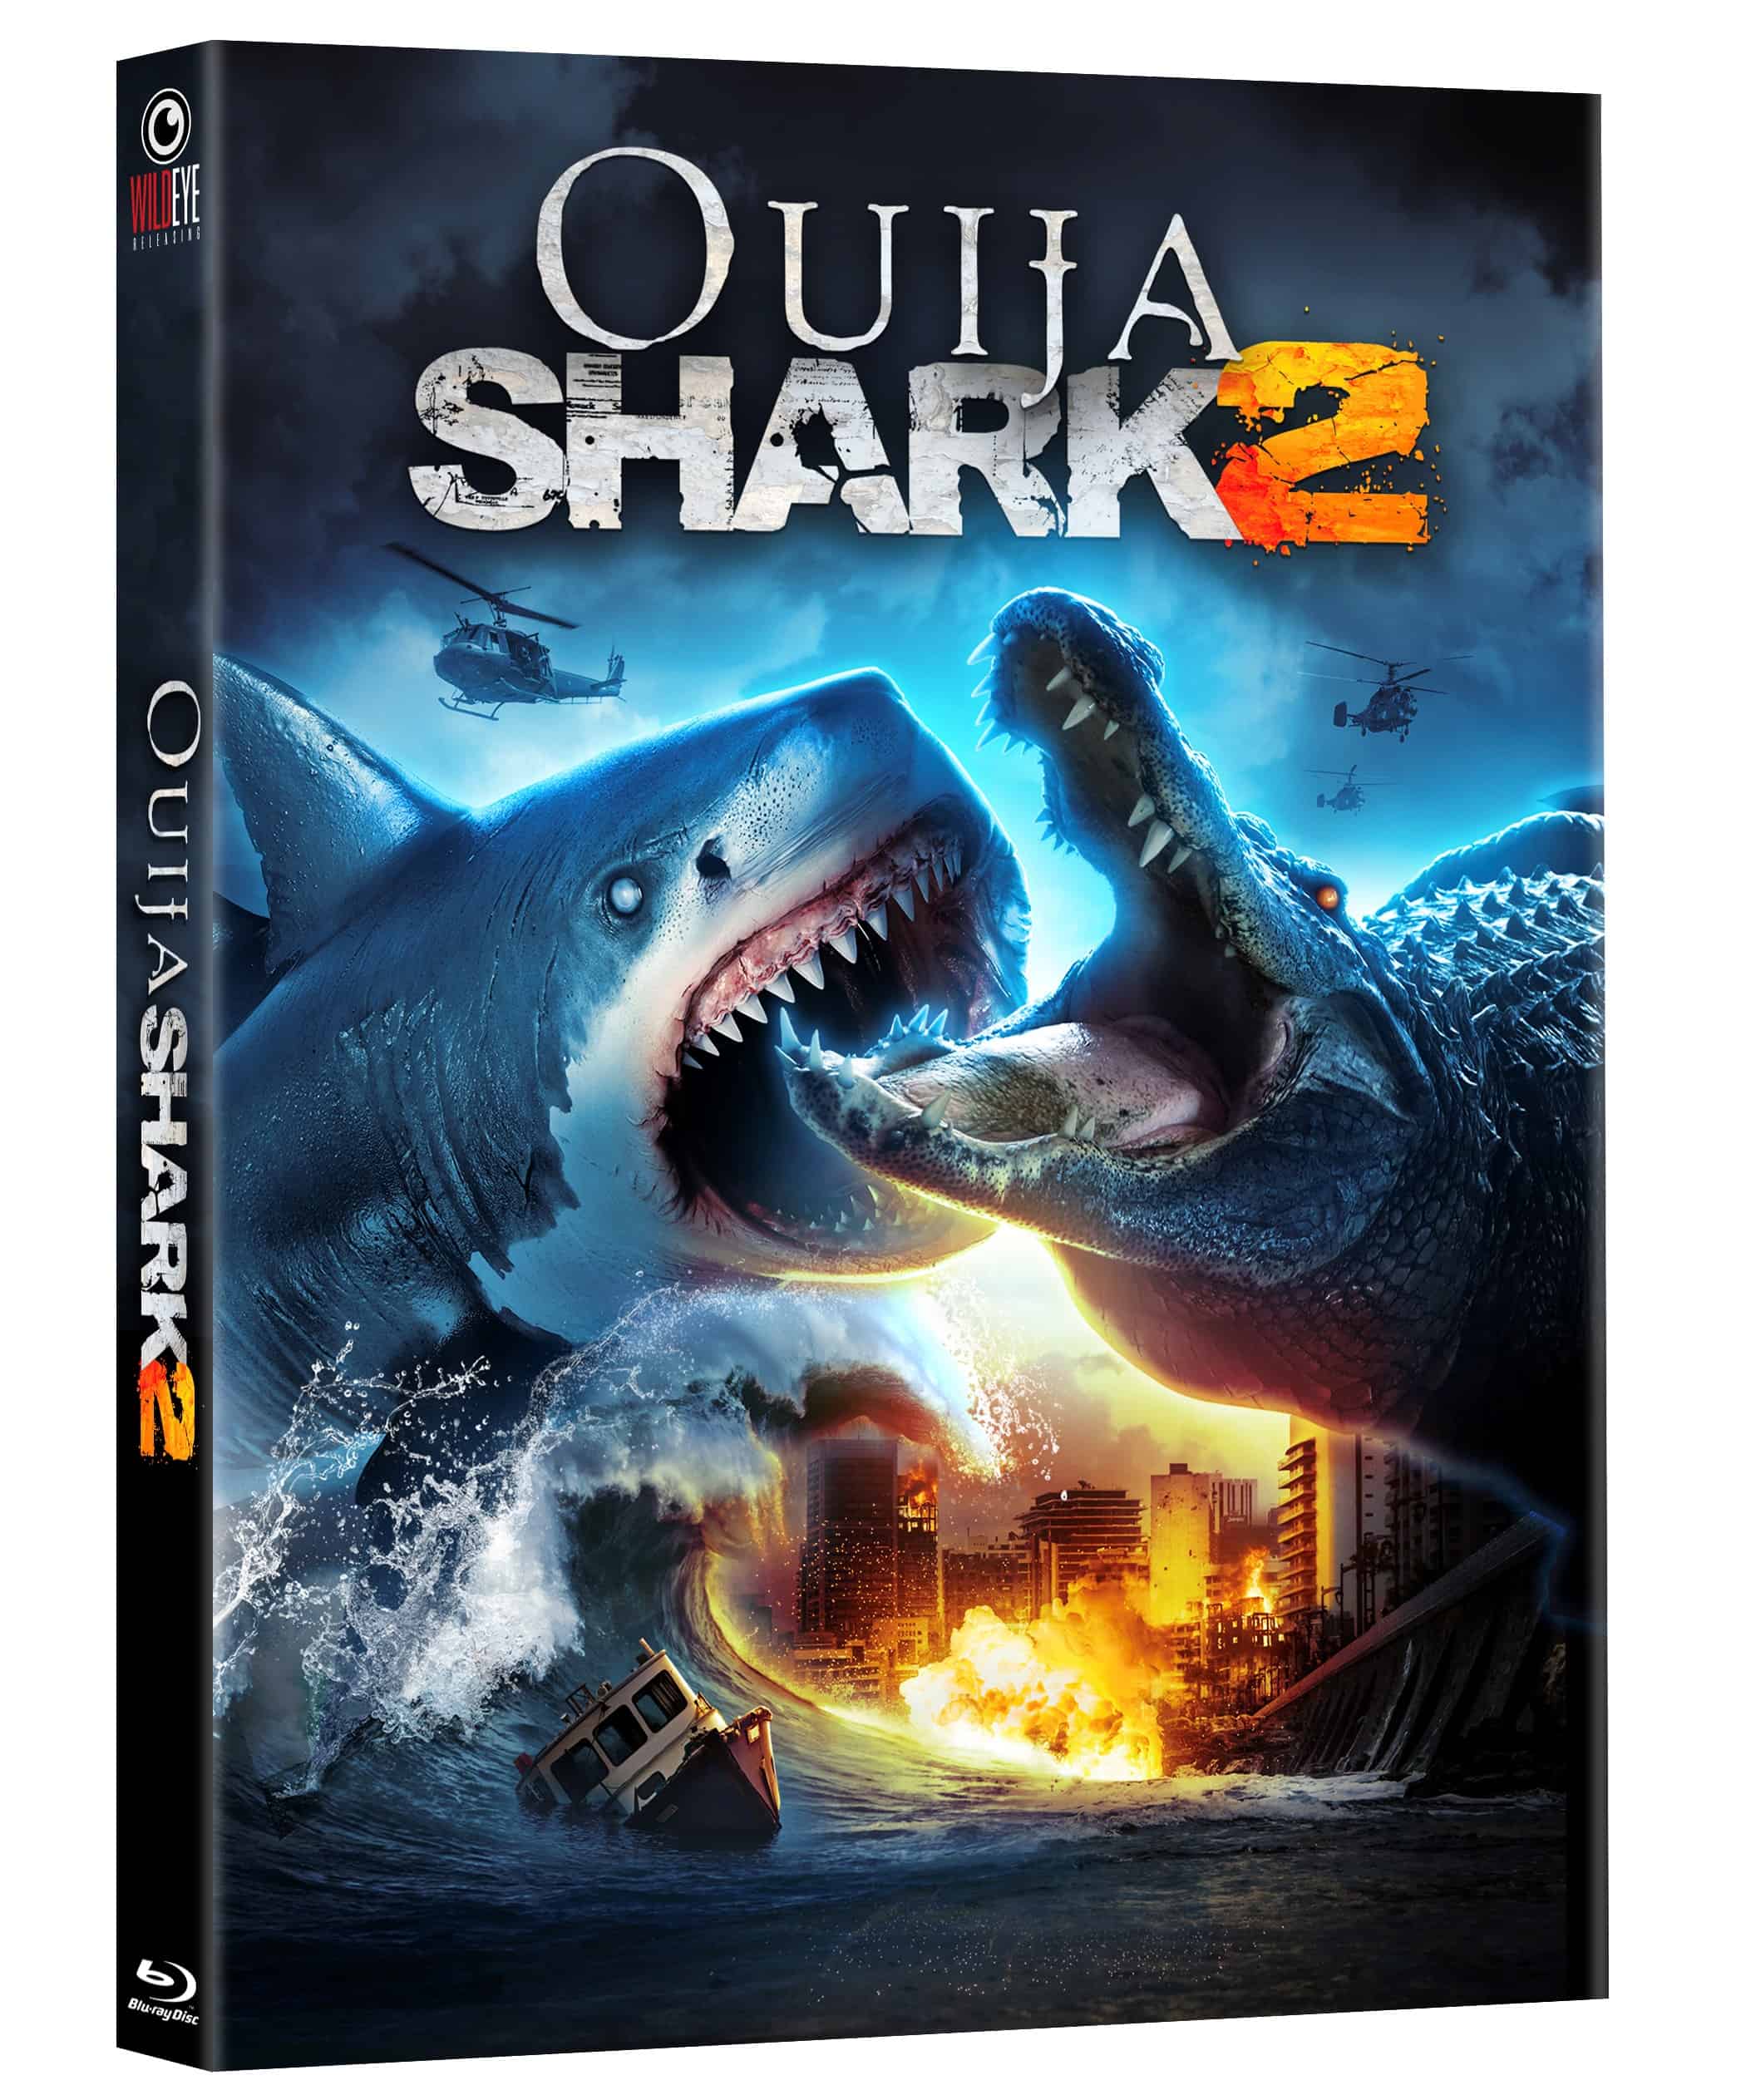 Wild Eye Releasing Announces Digital and Blu-Ray Release of Director John Migliore's OUIJA SHARK 2 31